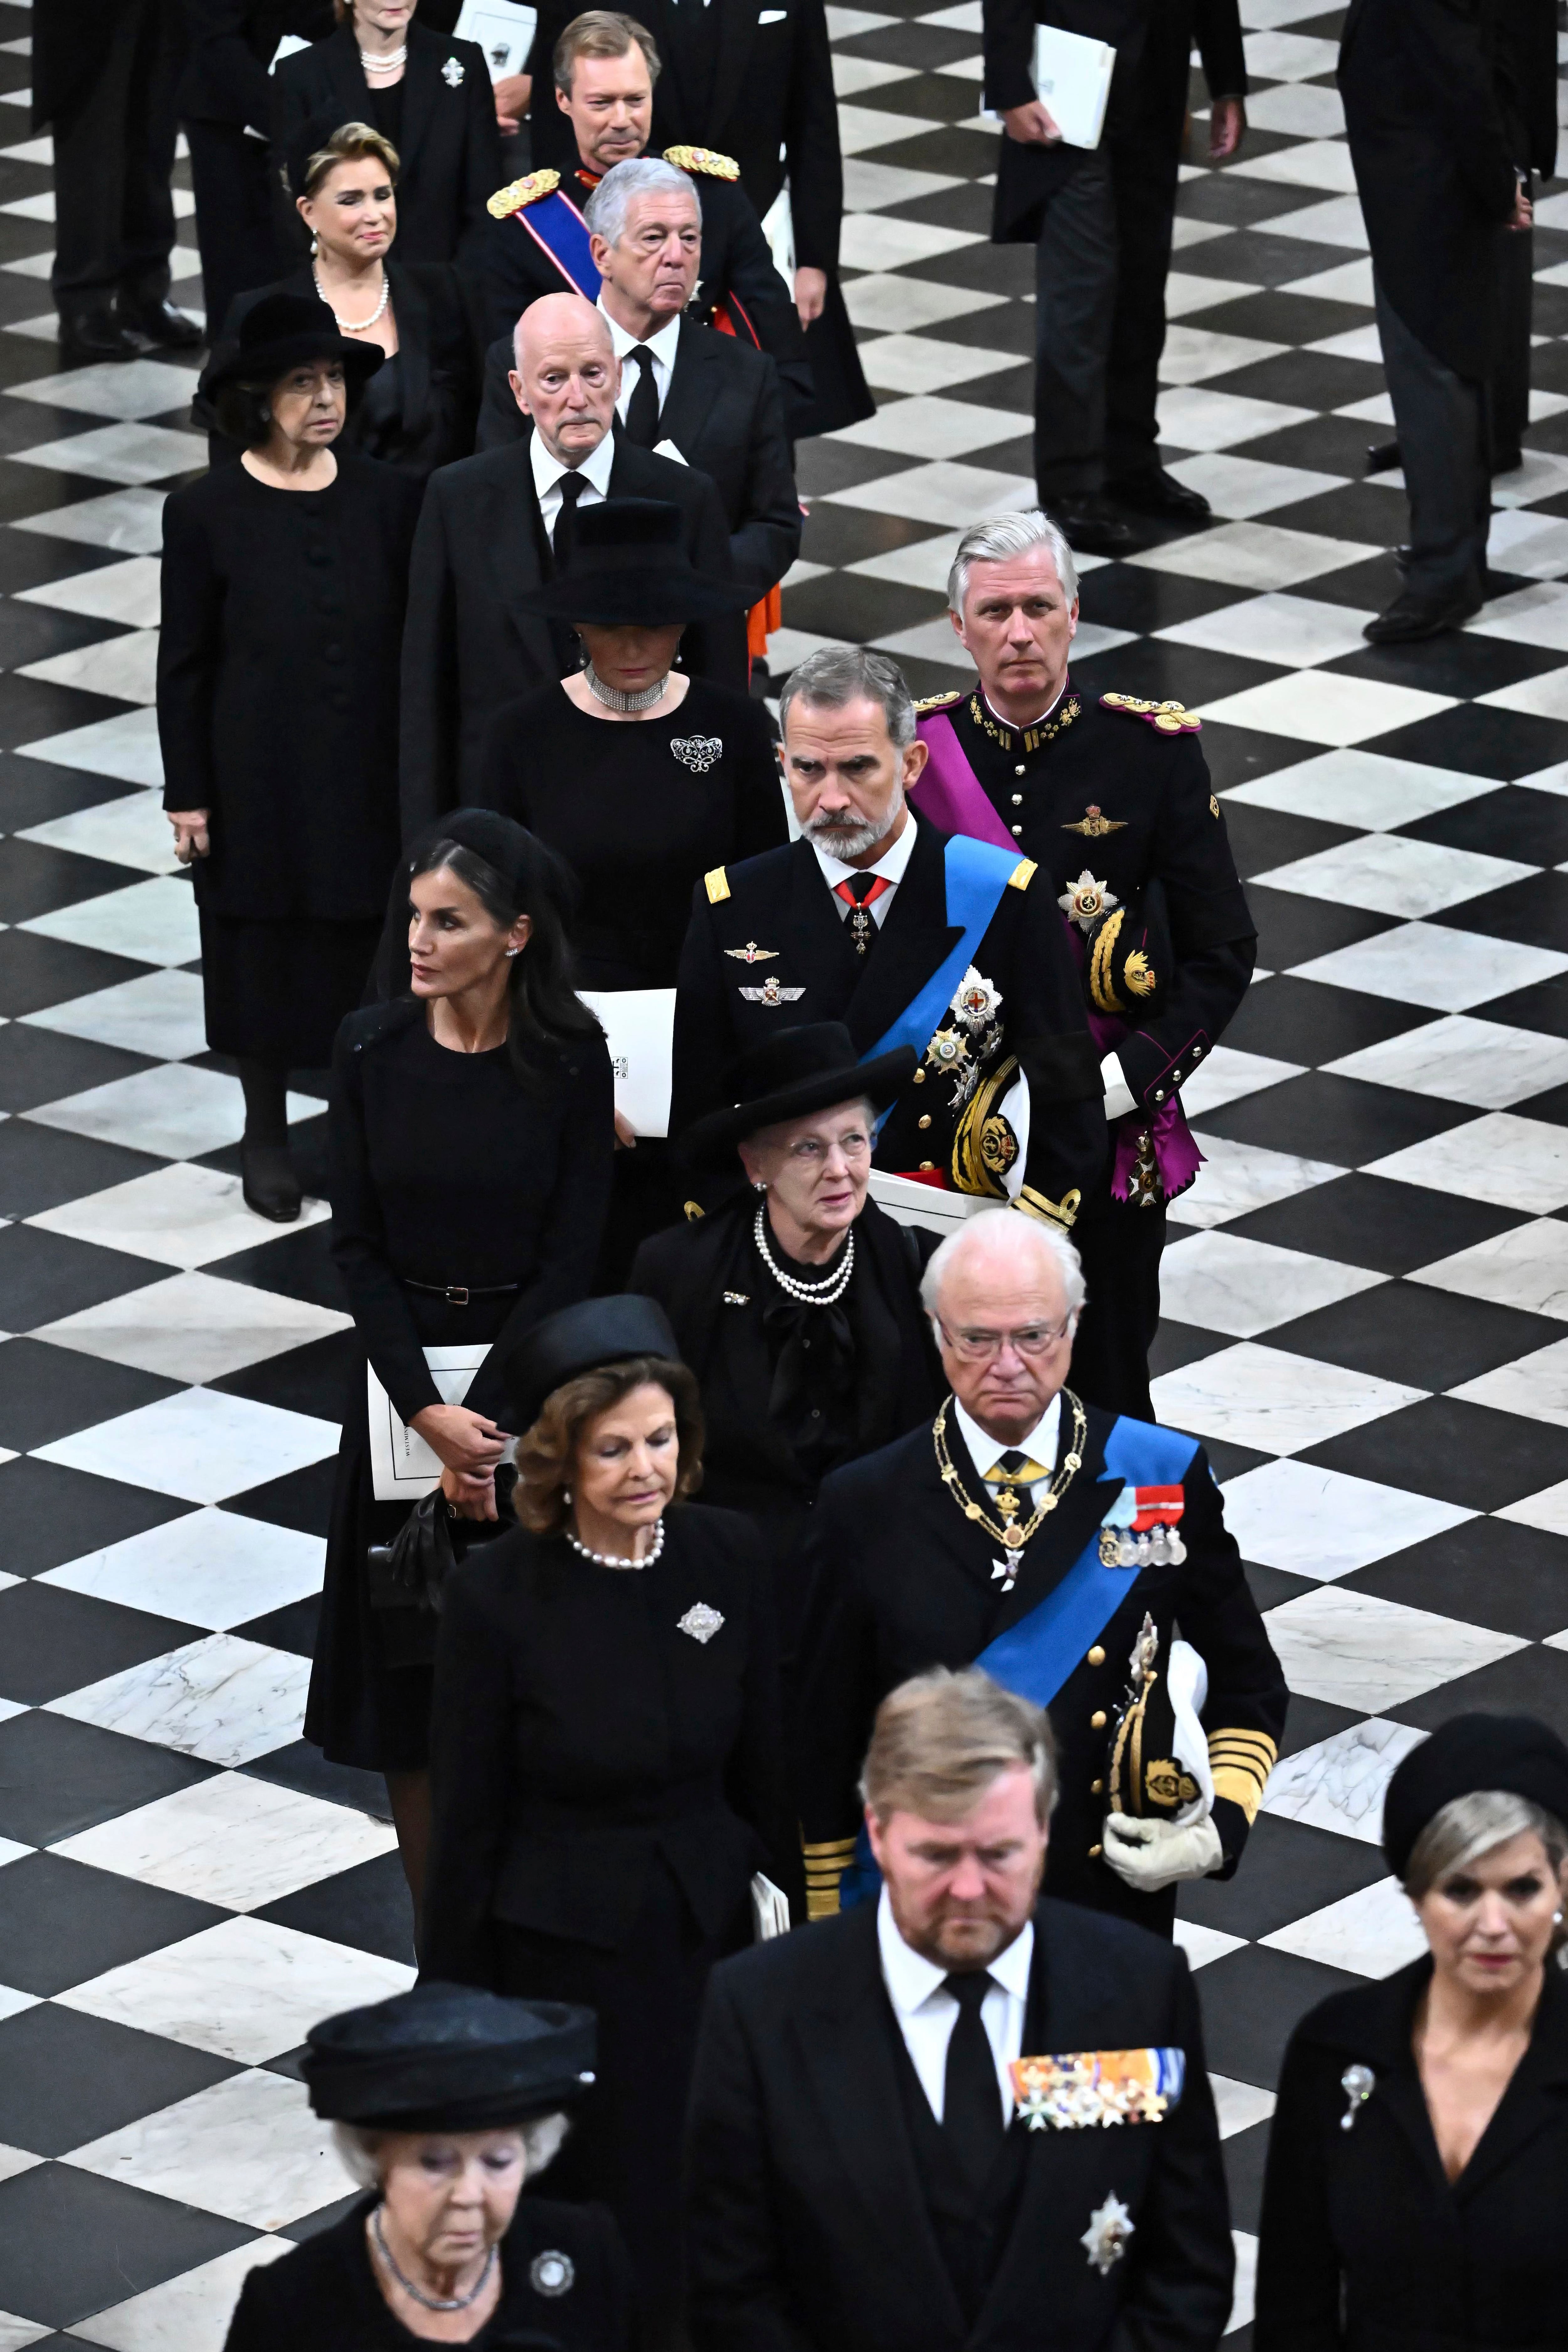 Danish queen tests positive after UK monarch’s funeral